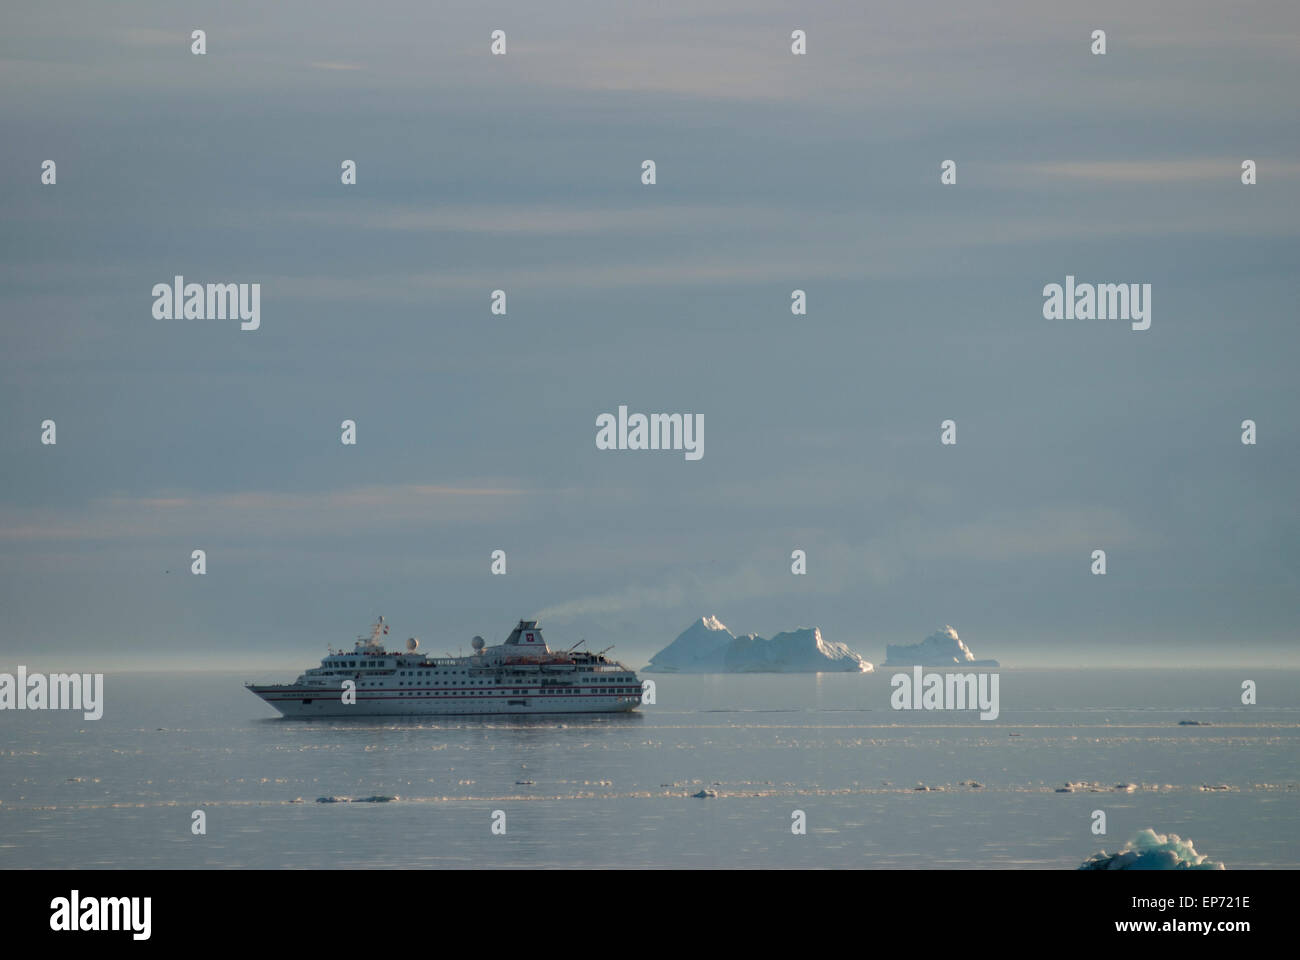 Giant Icebergs of Disko Bay near Illulisat, Greenland, a popular cruise destination Stock Photo